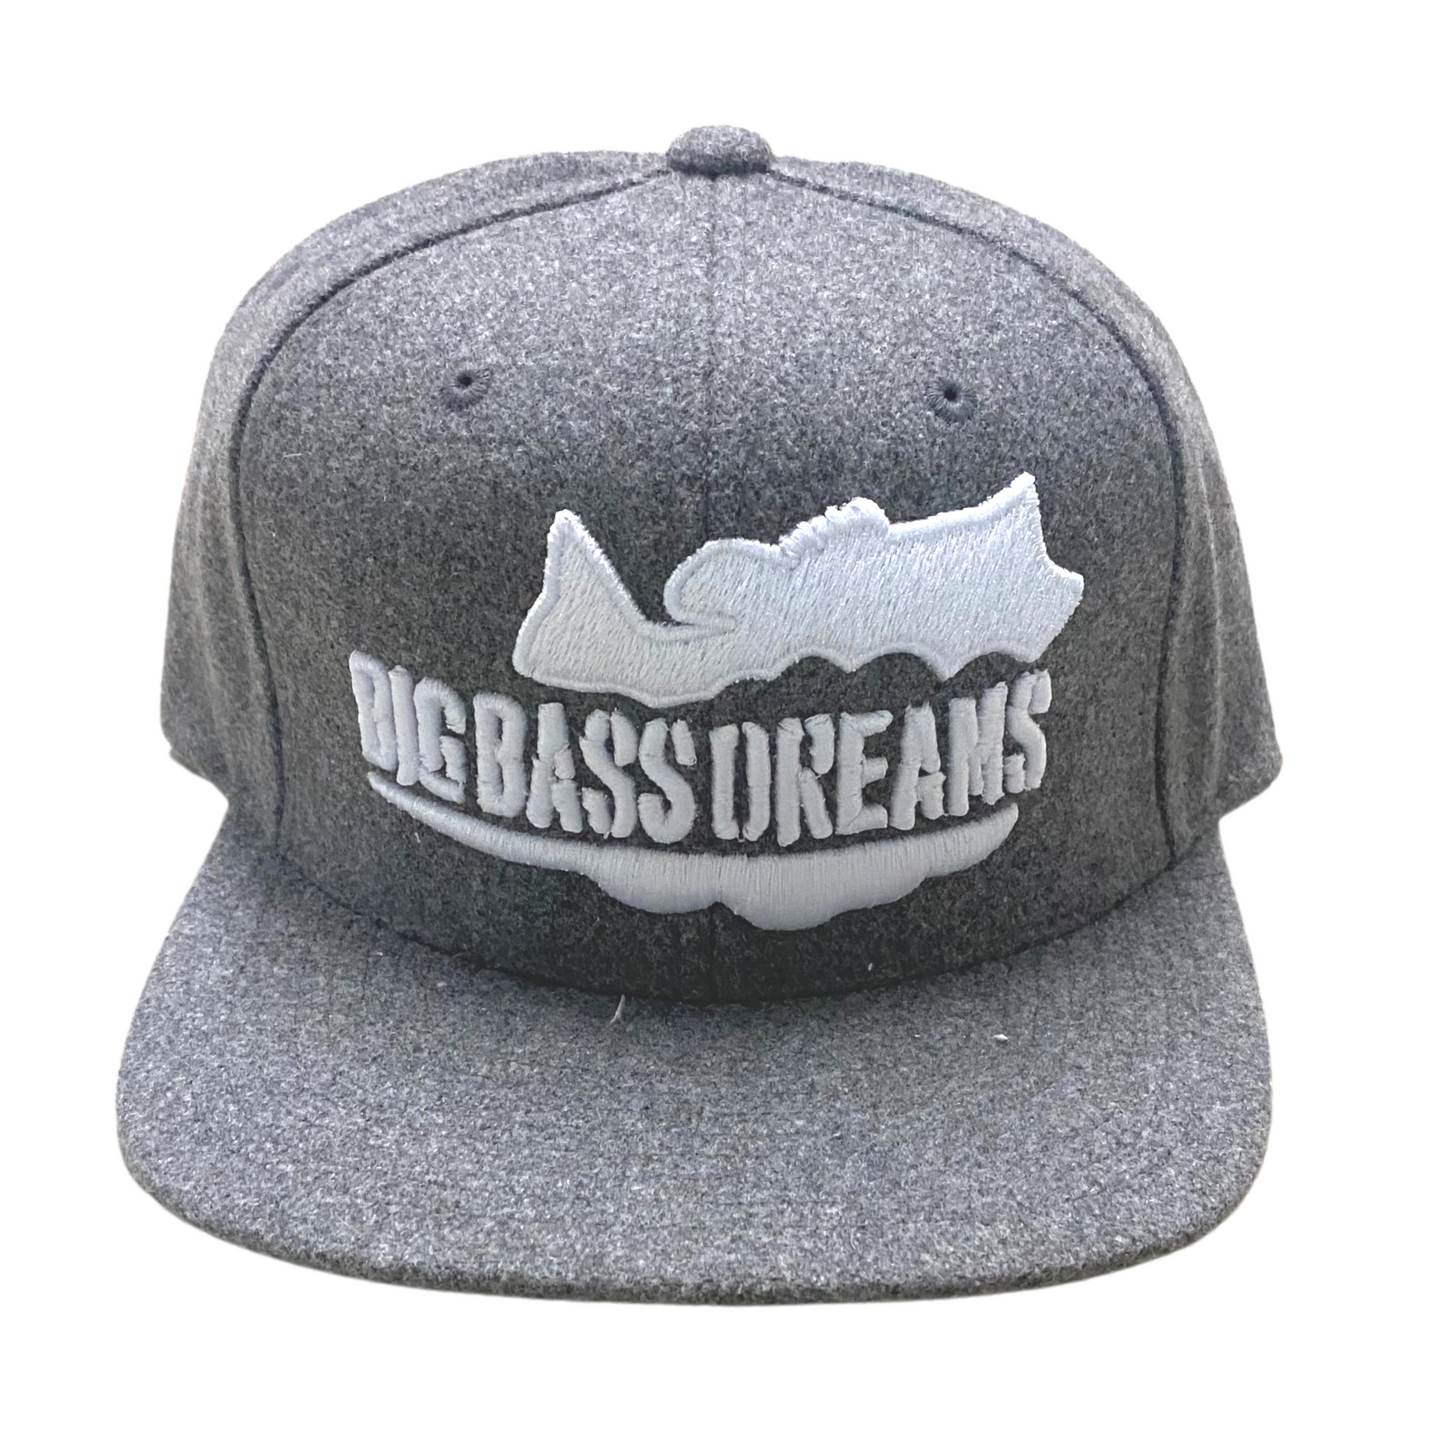 Big Bass Dreams Heather Grey Wool Logo Snapback Hat